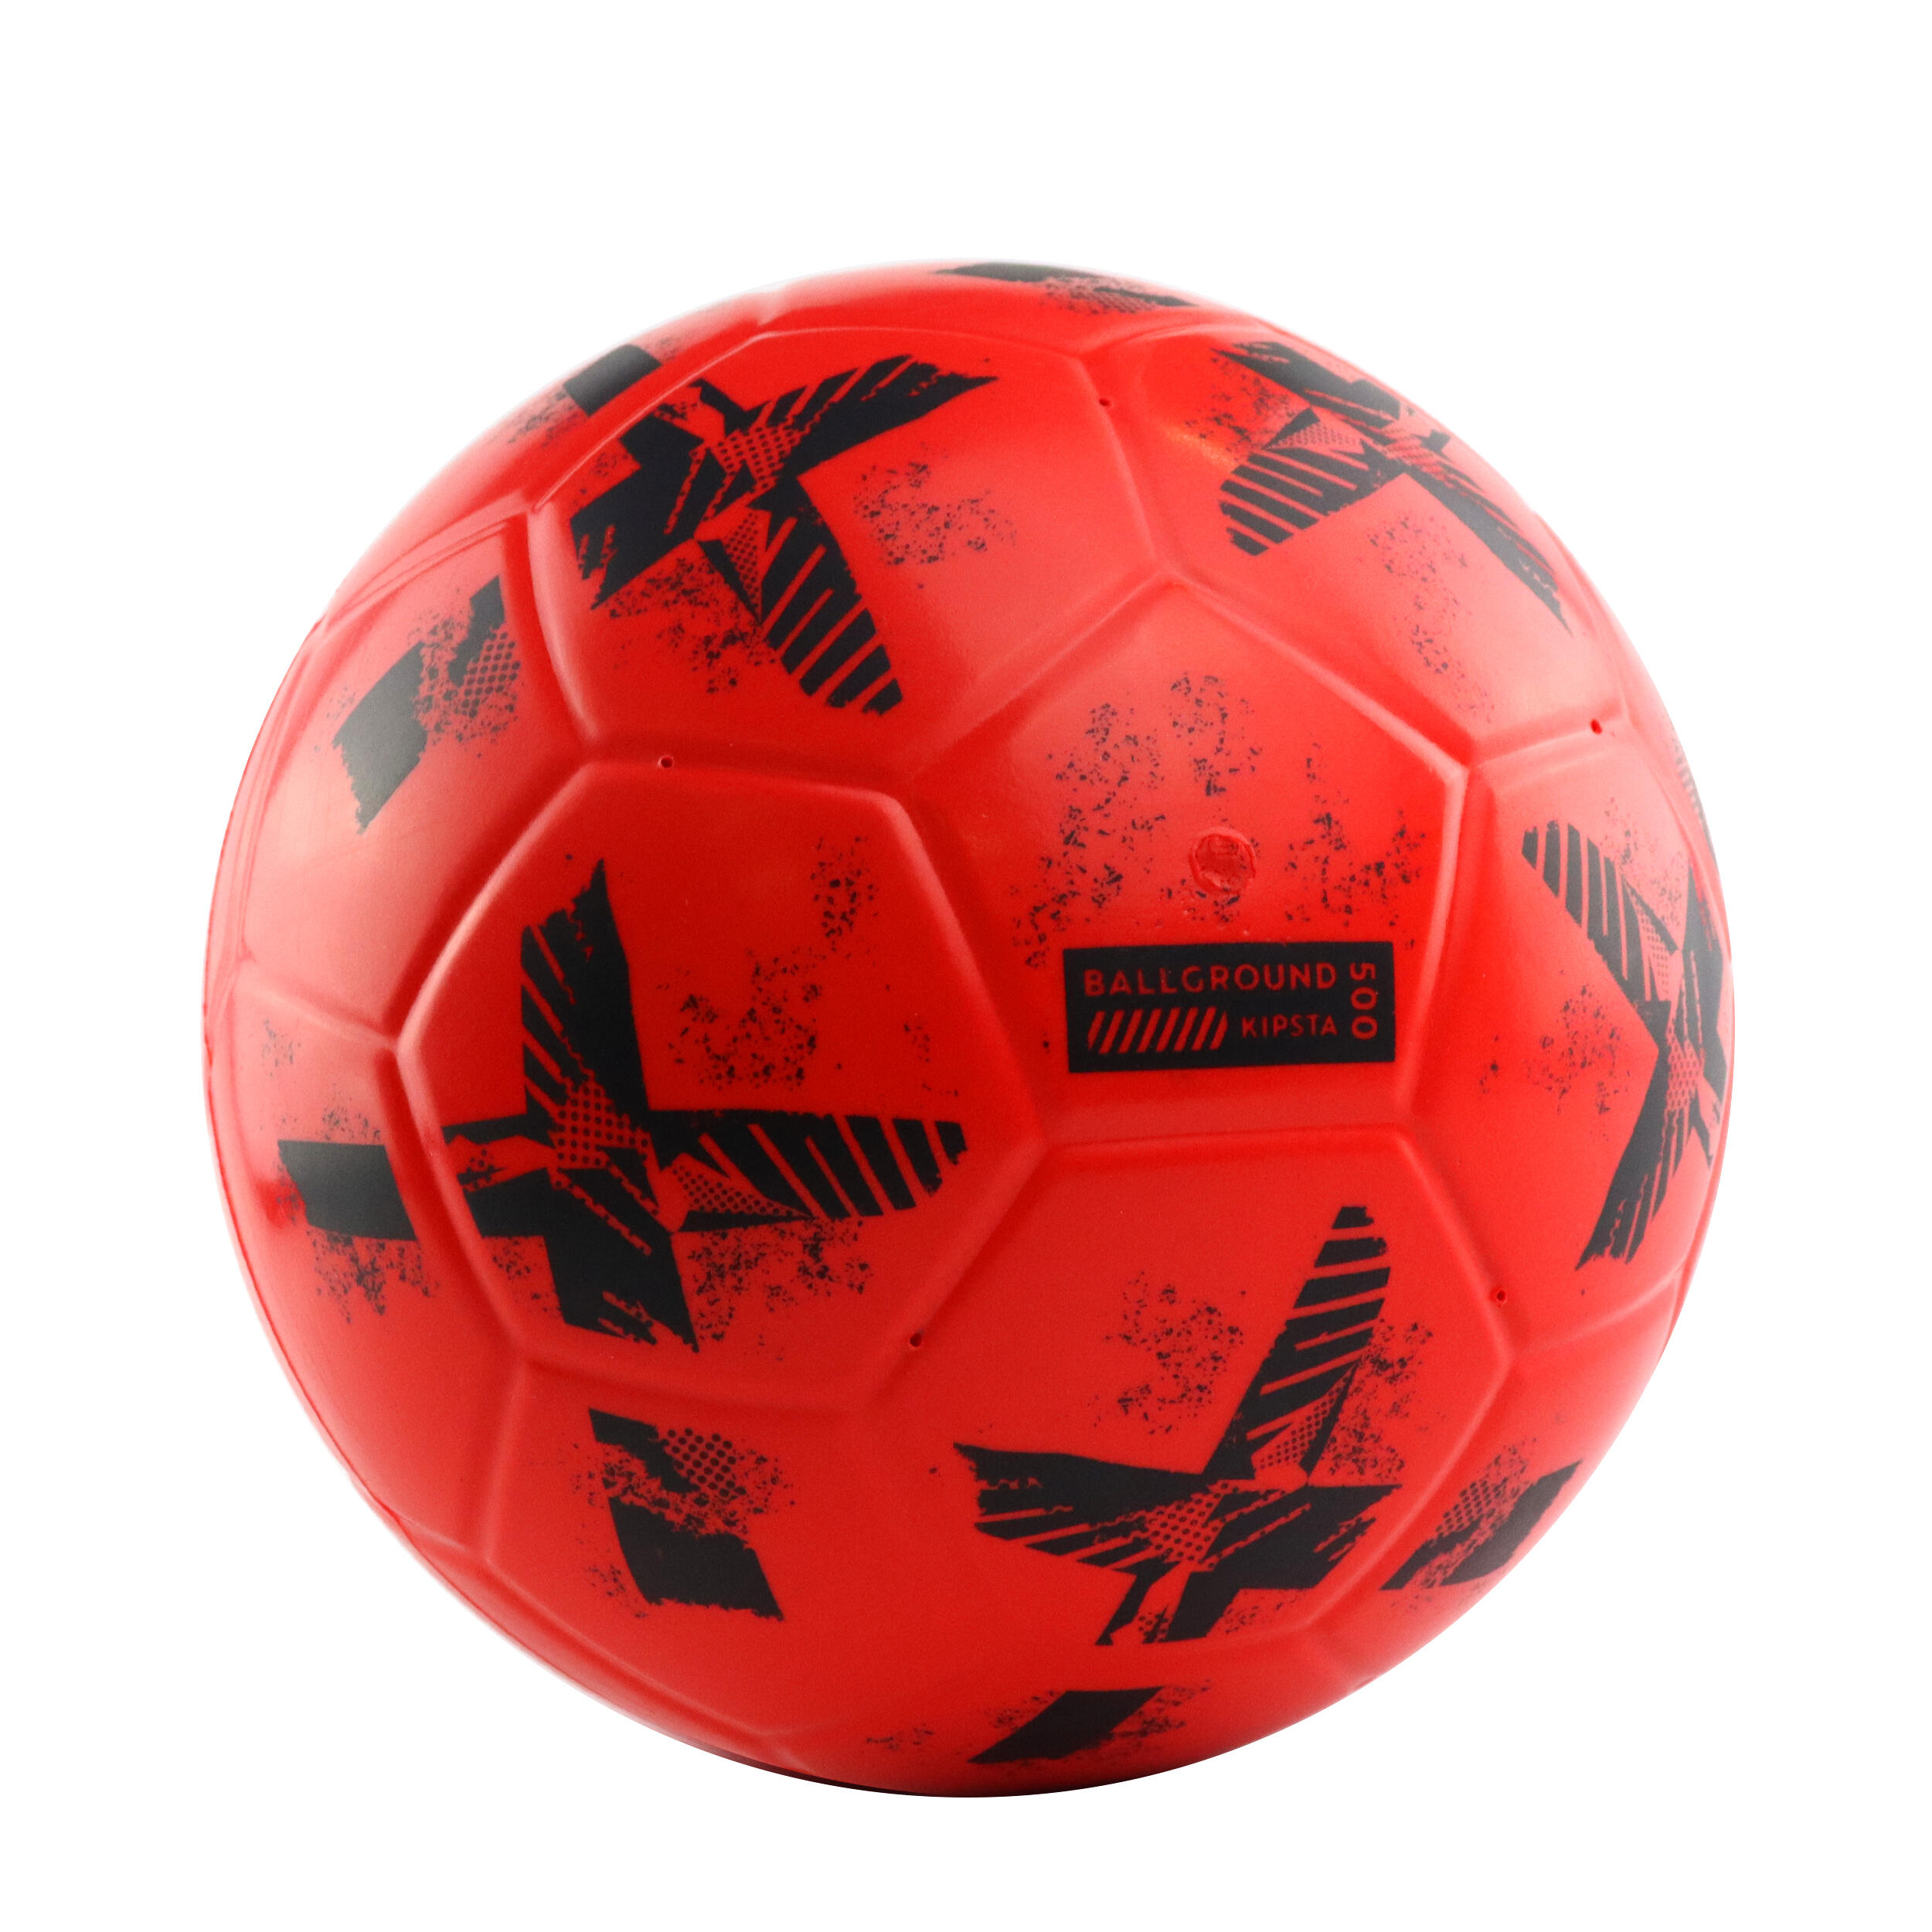 Foam Football S4 Ballground 500 - Red/Black 1/6